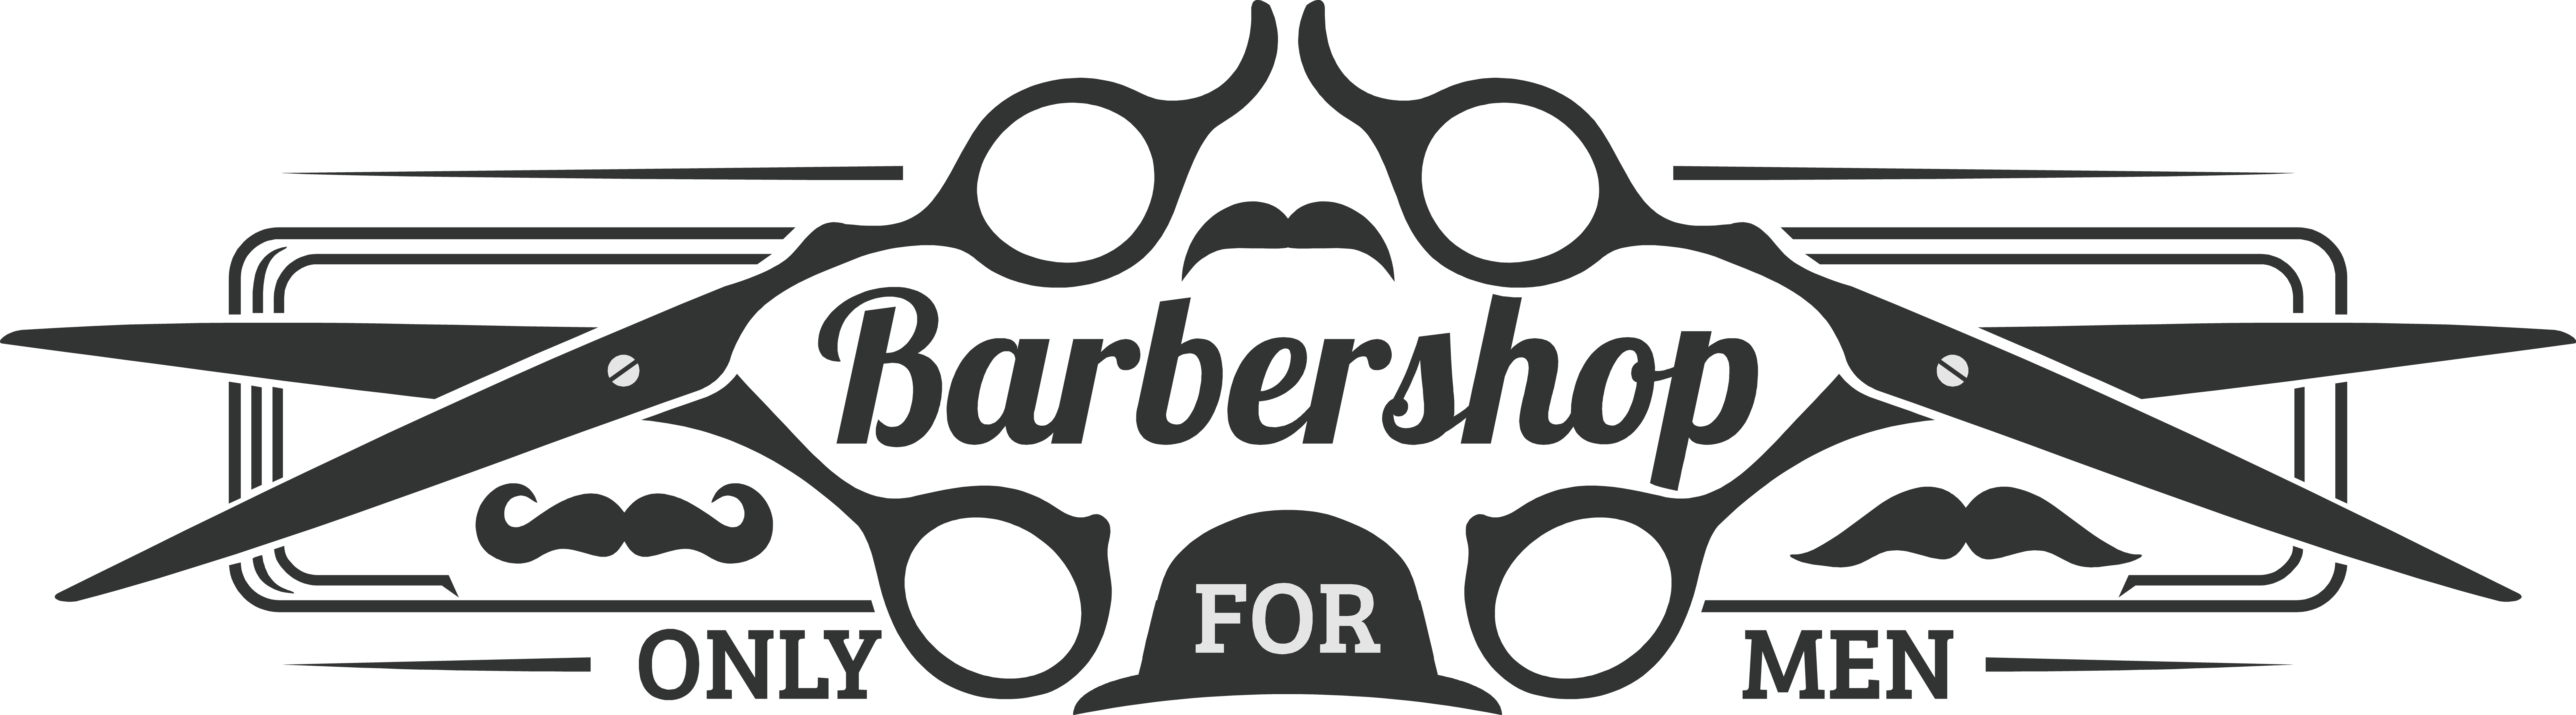 logo barbershop hd